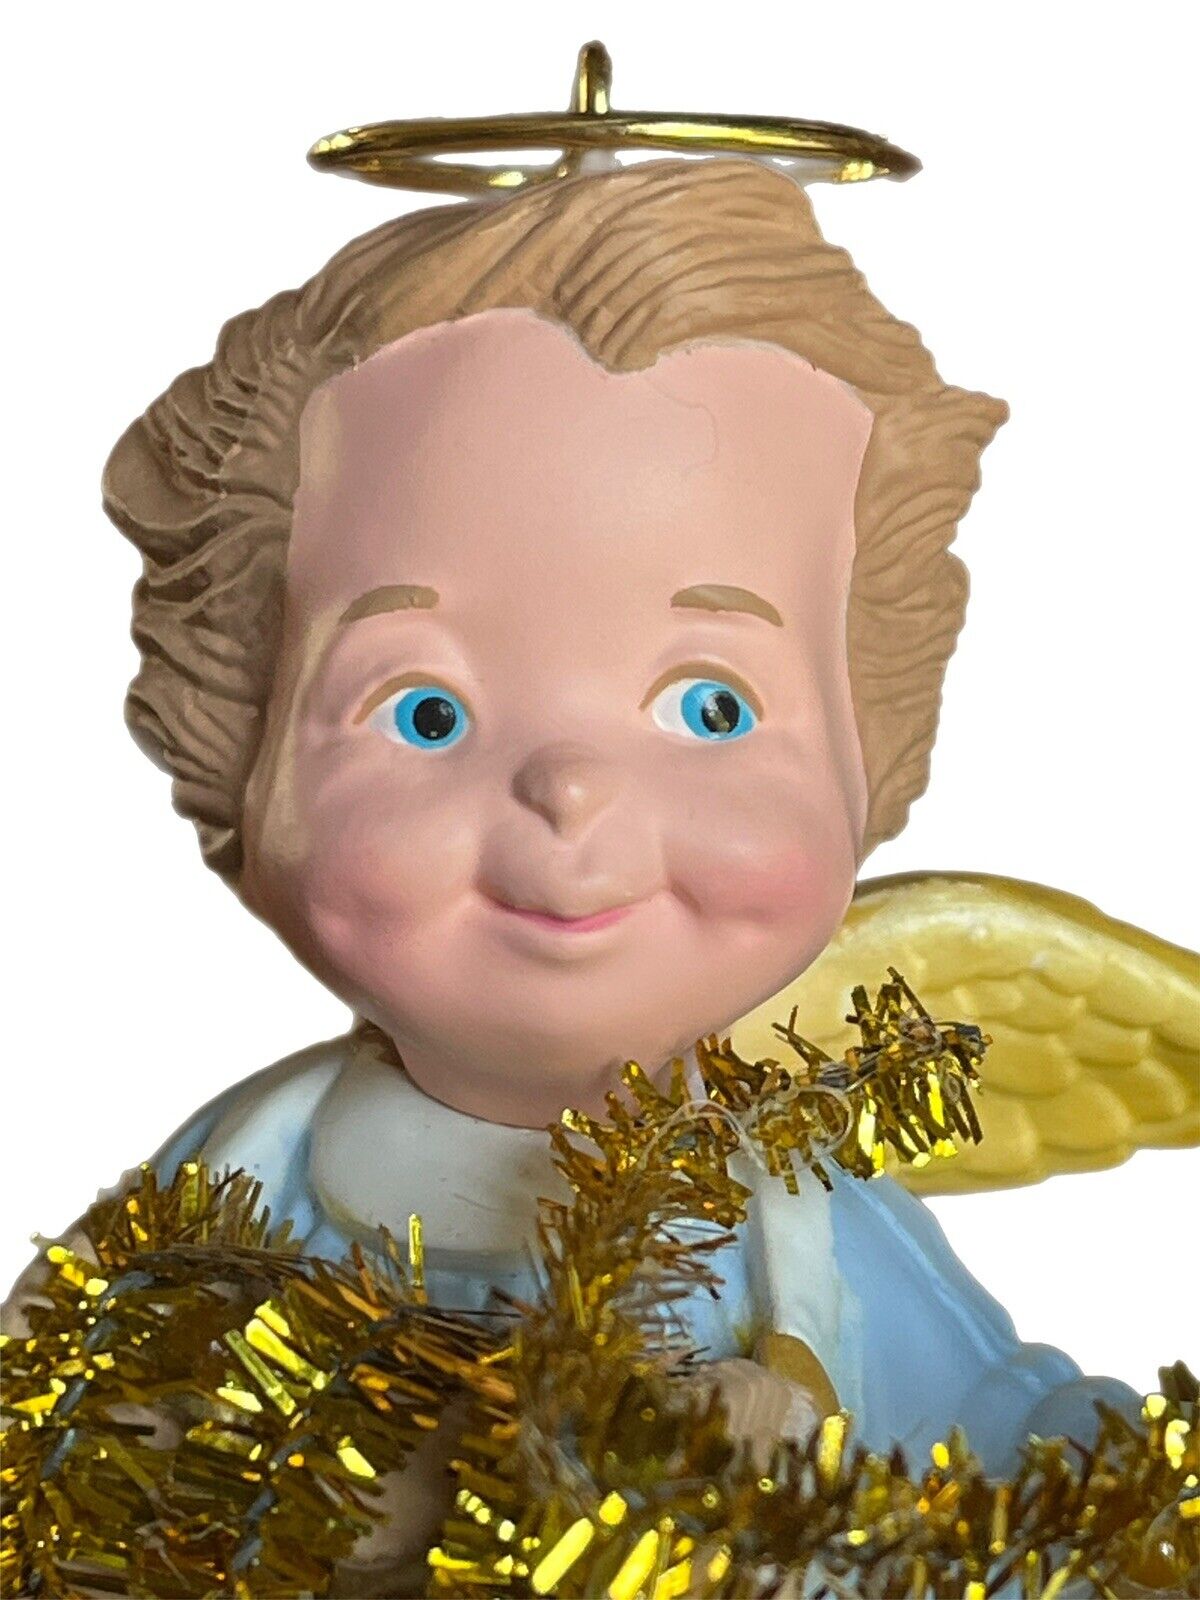 Vtg Hallmark Keepsake Christmas Ornament Resin Sparkling Angel Boy Light Up 1991